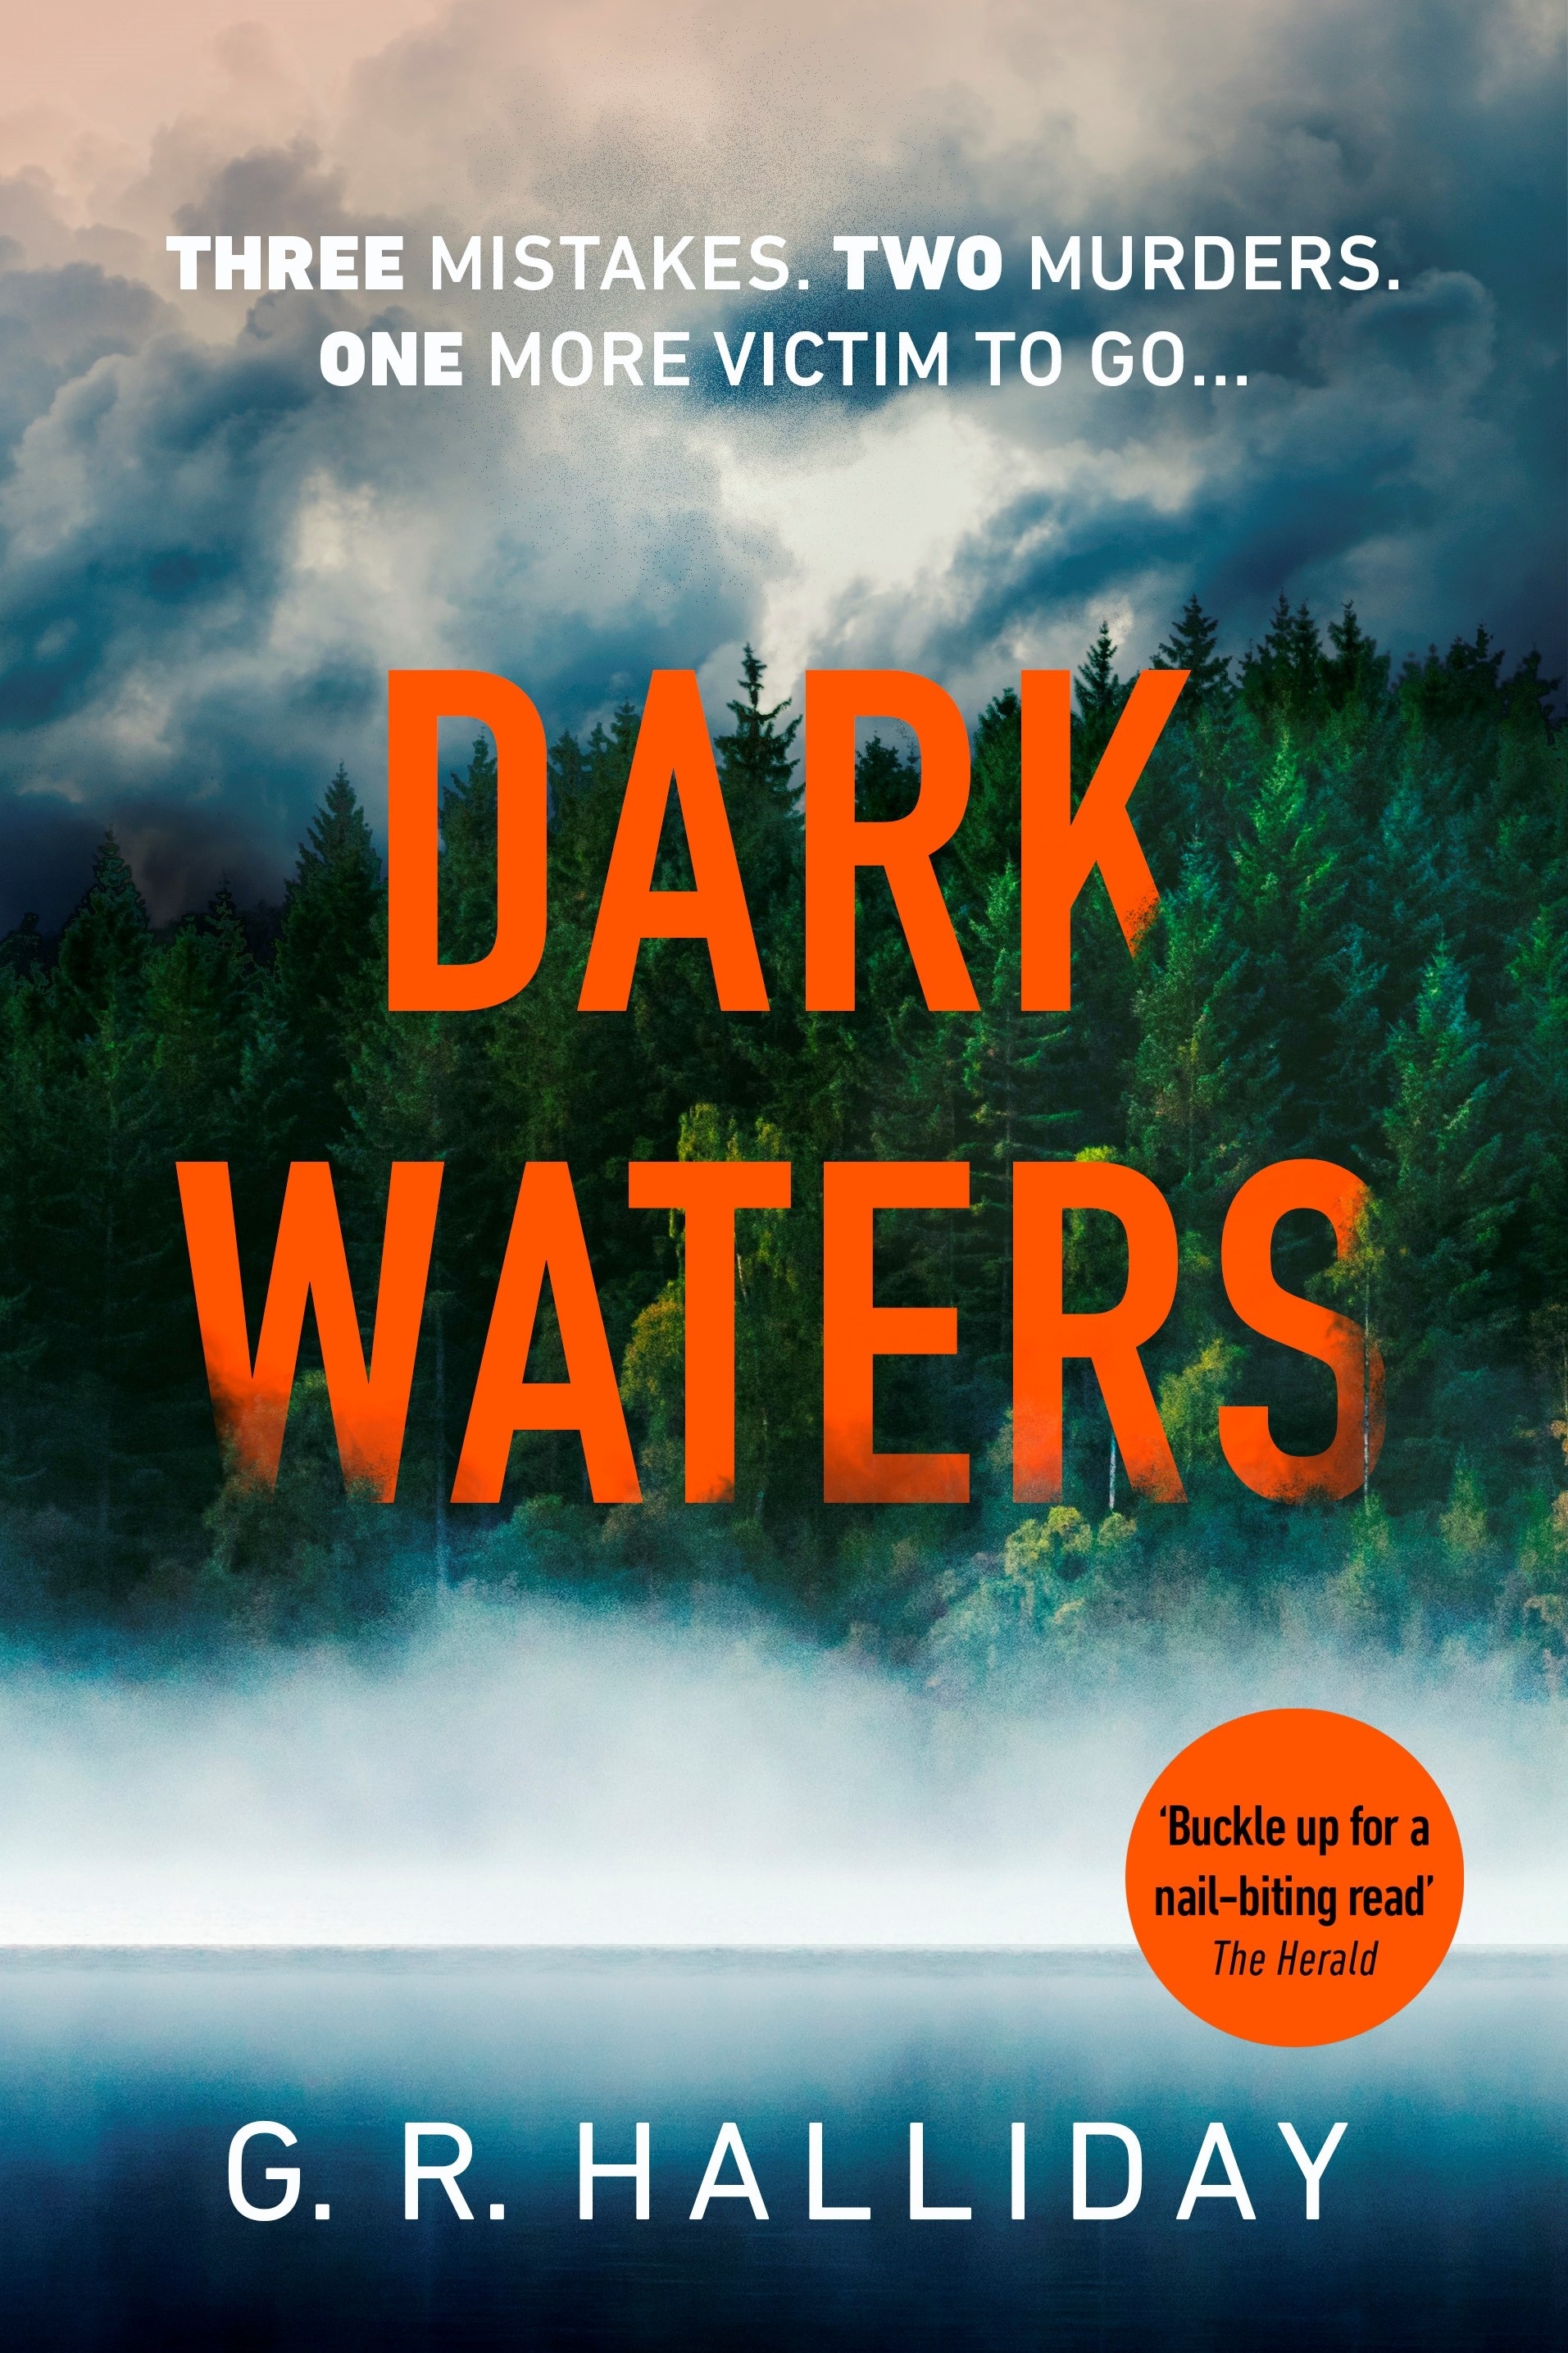 Book “Dark Waters” by G. R. Halliday — July 22, 2021